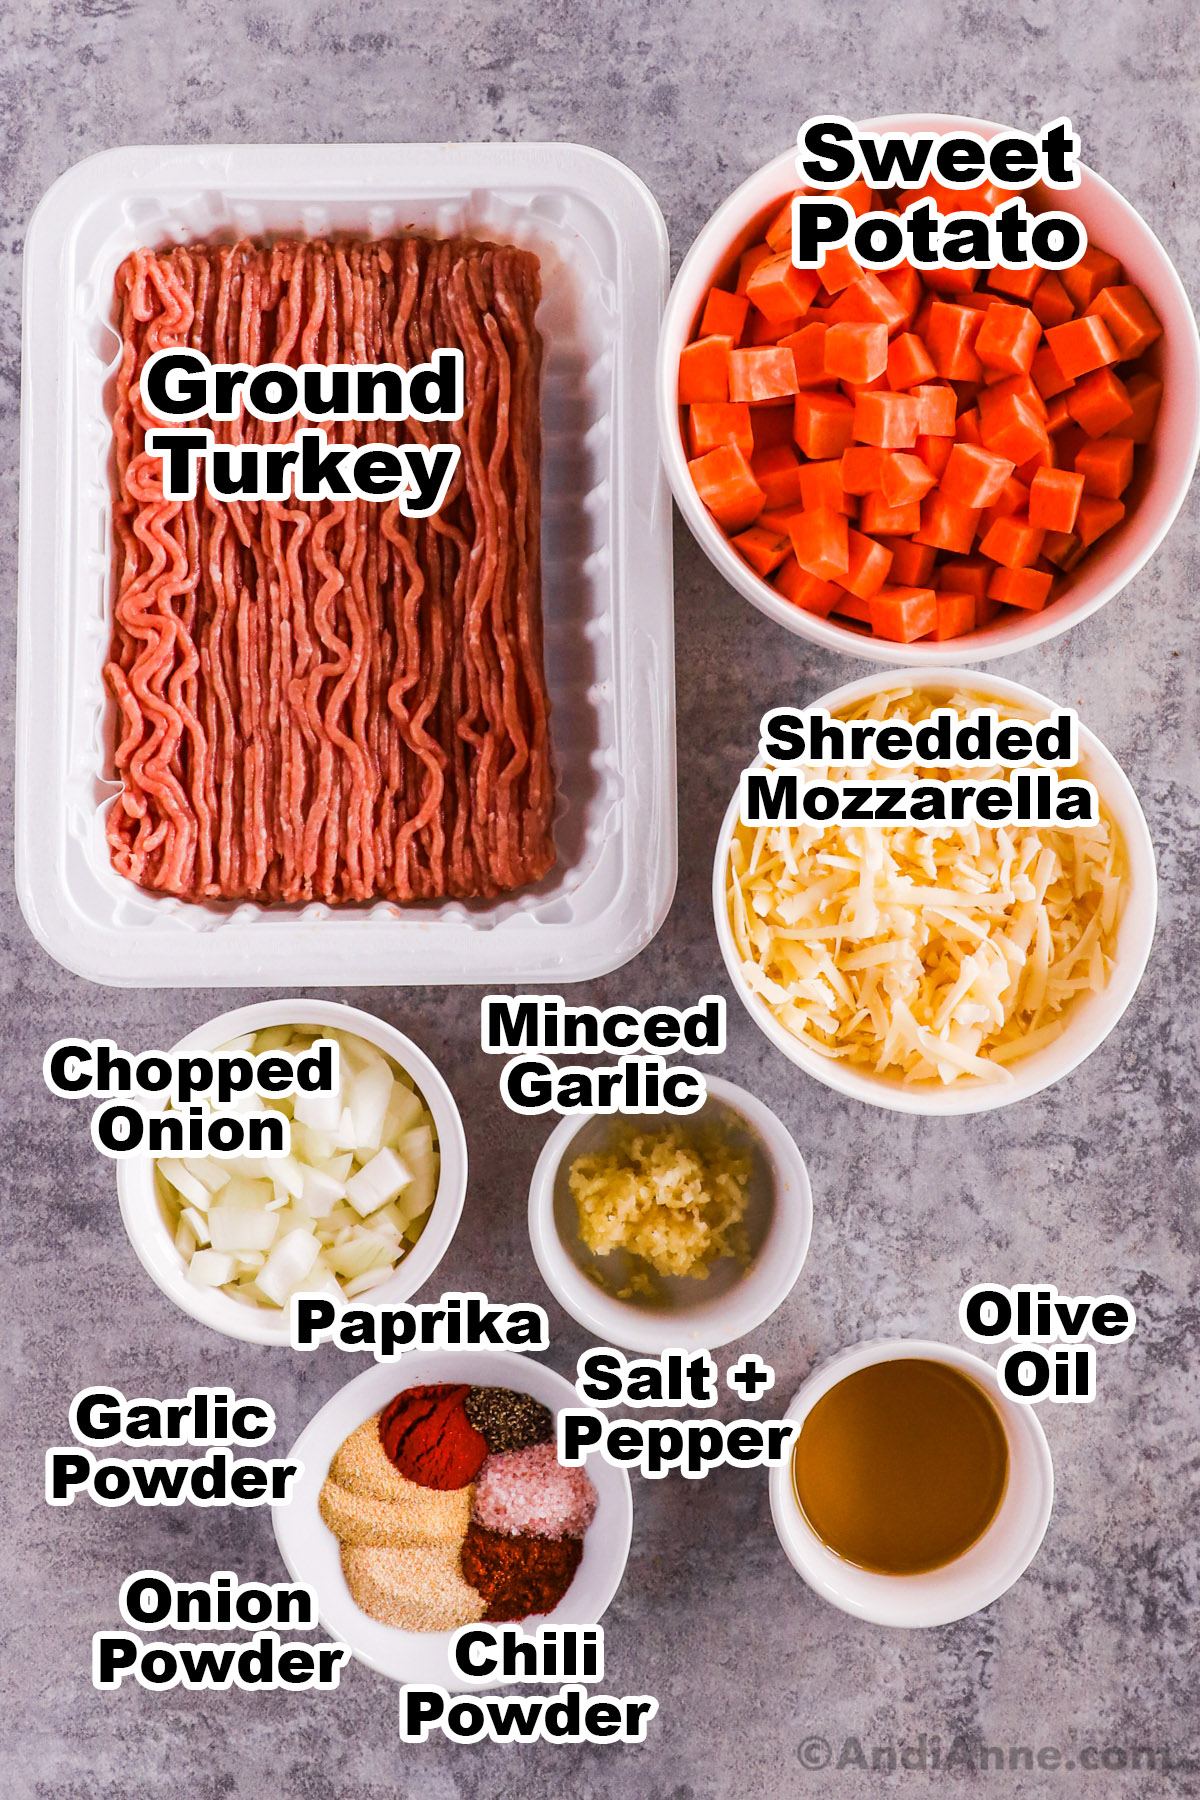 Recipe ingredients including raw ground turkey, chopped sweet potato, shredded mozzarella, chopped onion, minced garlic, olive oil and spices.